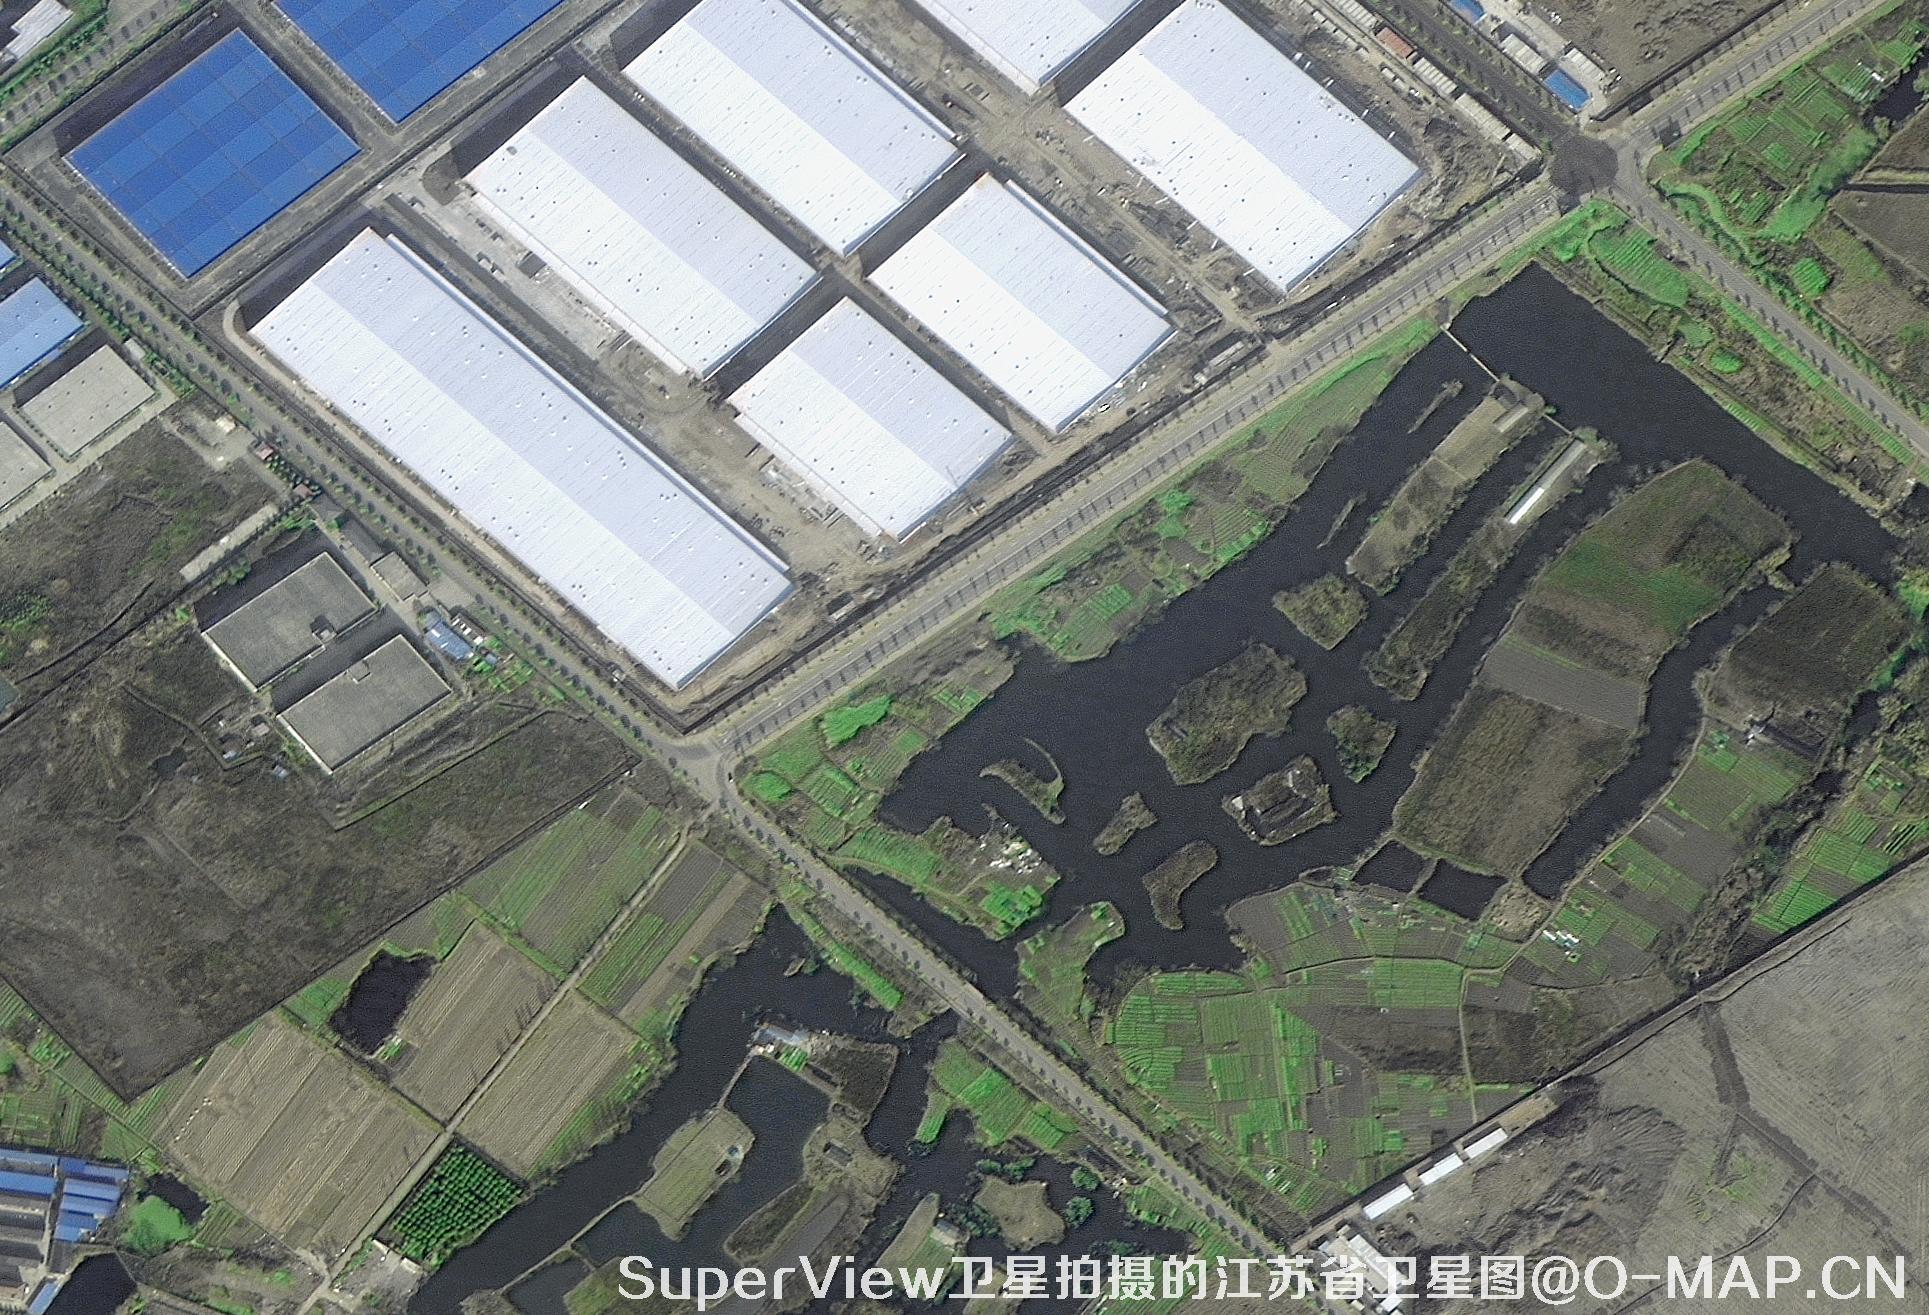 SuperView卫星拍摄的江苏省句容市卫星图